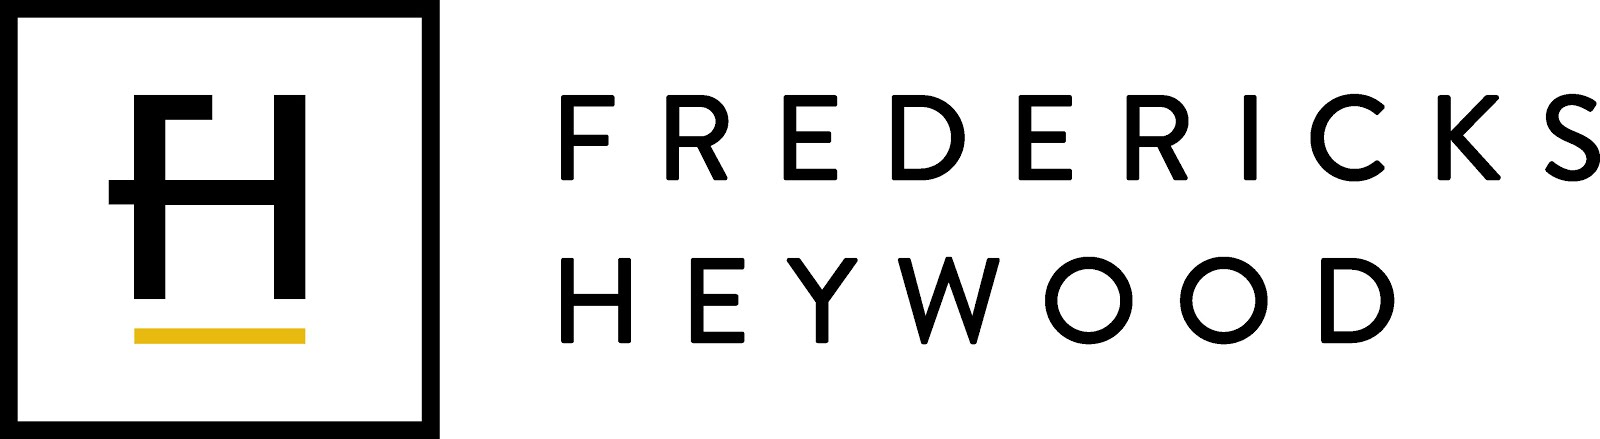 Fredericks Heywood